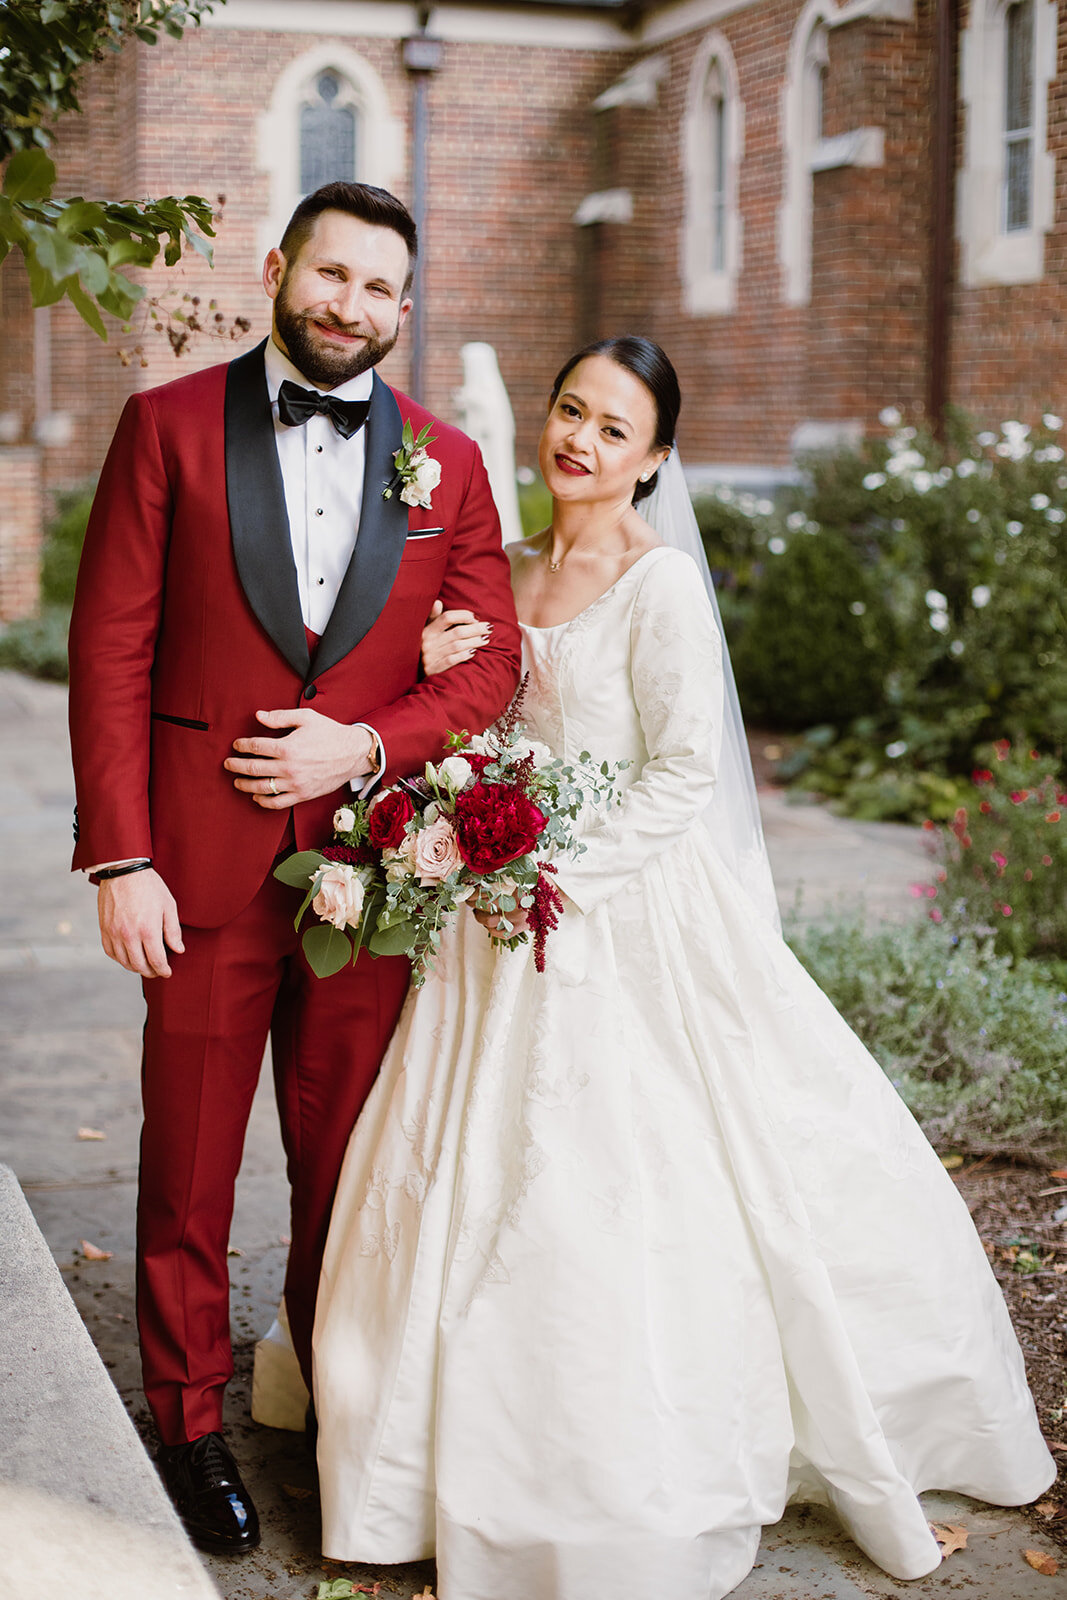  Soft Drop Wedding Veil | Bride and Groom Portraits | Romantic wedding at St. Bridget Catholic Church, Richmond, VA | Black tie wedding with a red tux and custom Anne Barge gown 